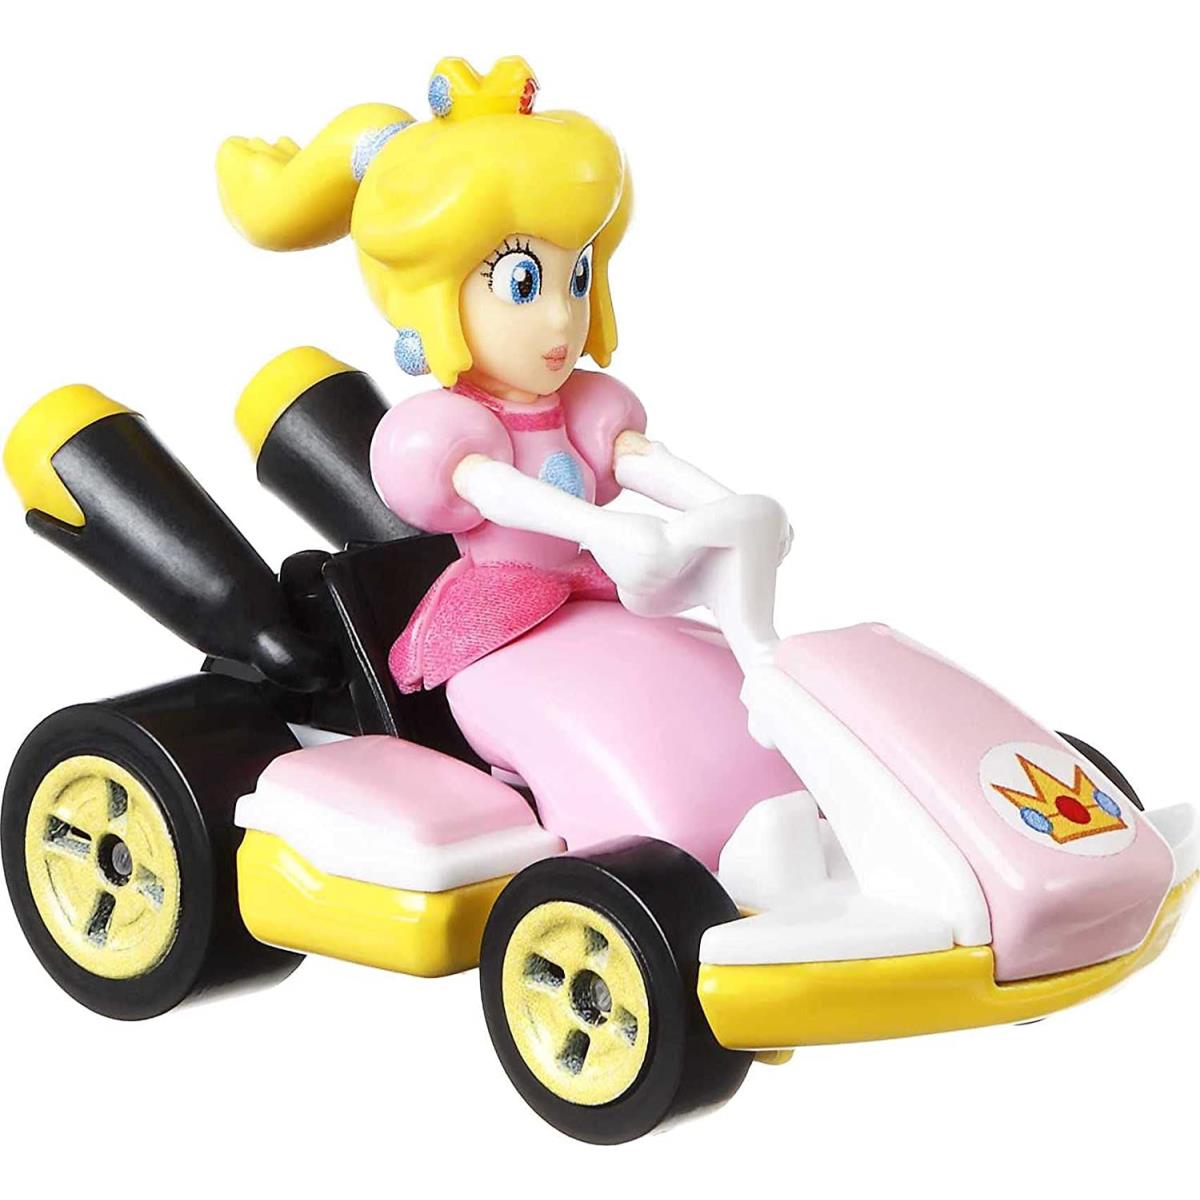 Hot Wheels Mario Kart Vehicle 4-Pack Set of 4 Fan-favorite Characters Includes